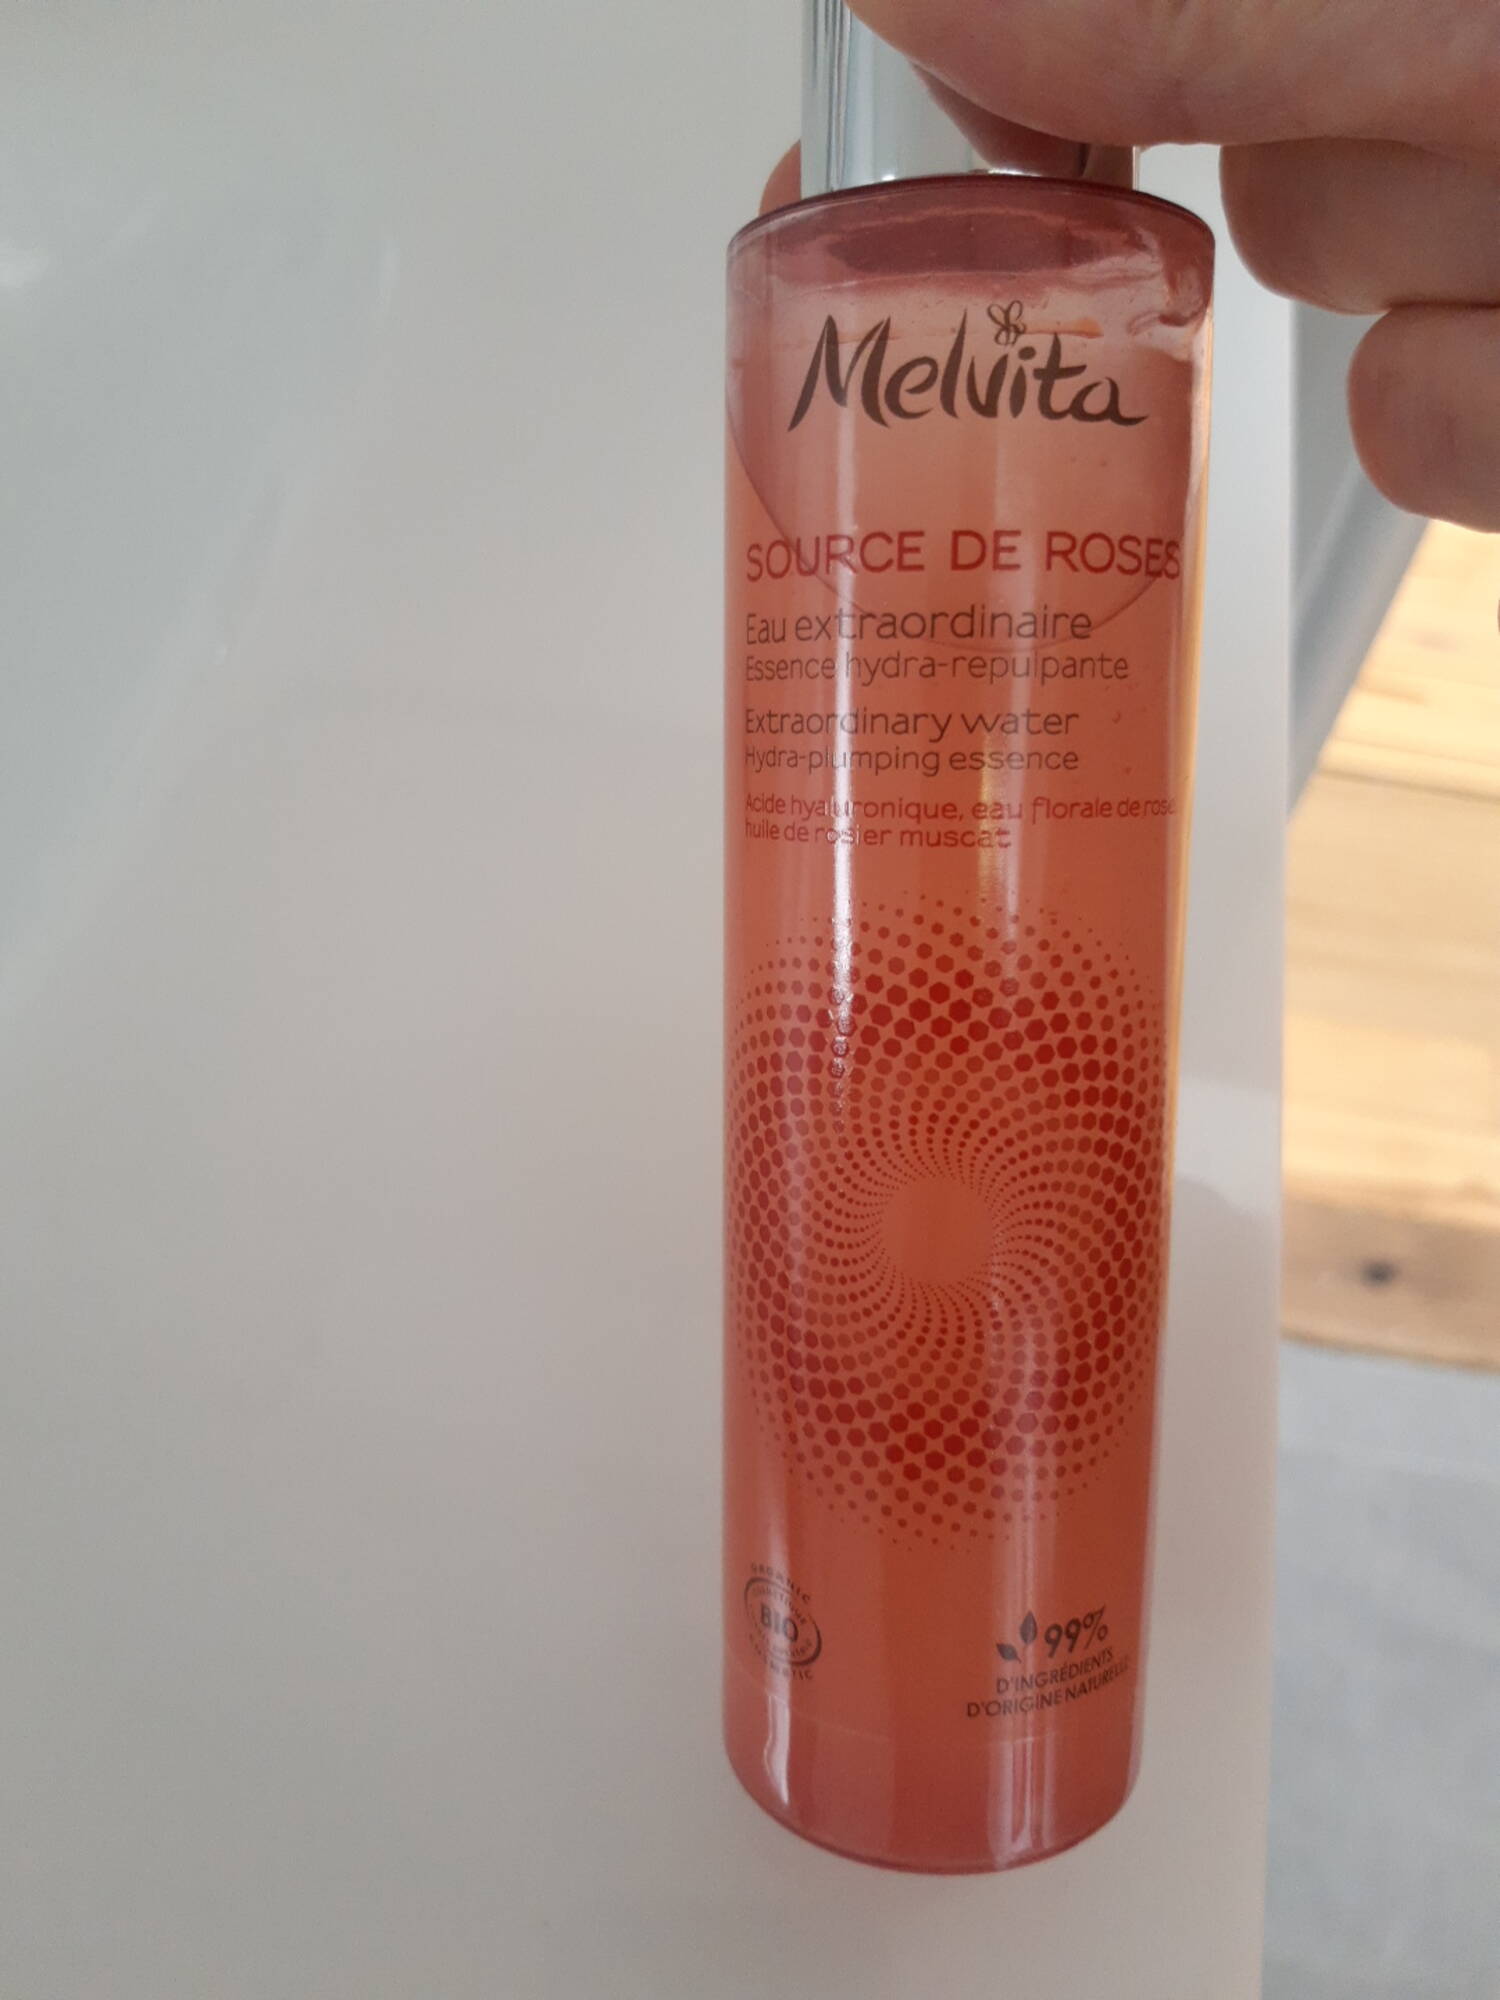 MELVITA - Source de roses eau extraordinaire 